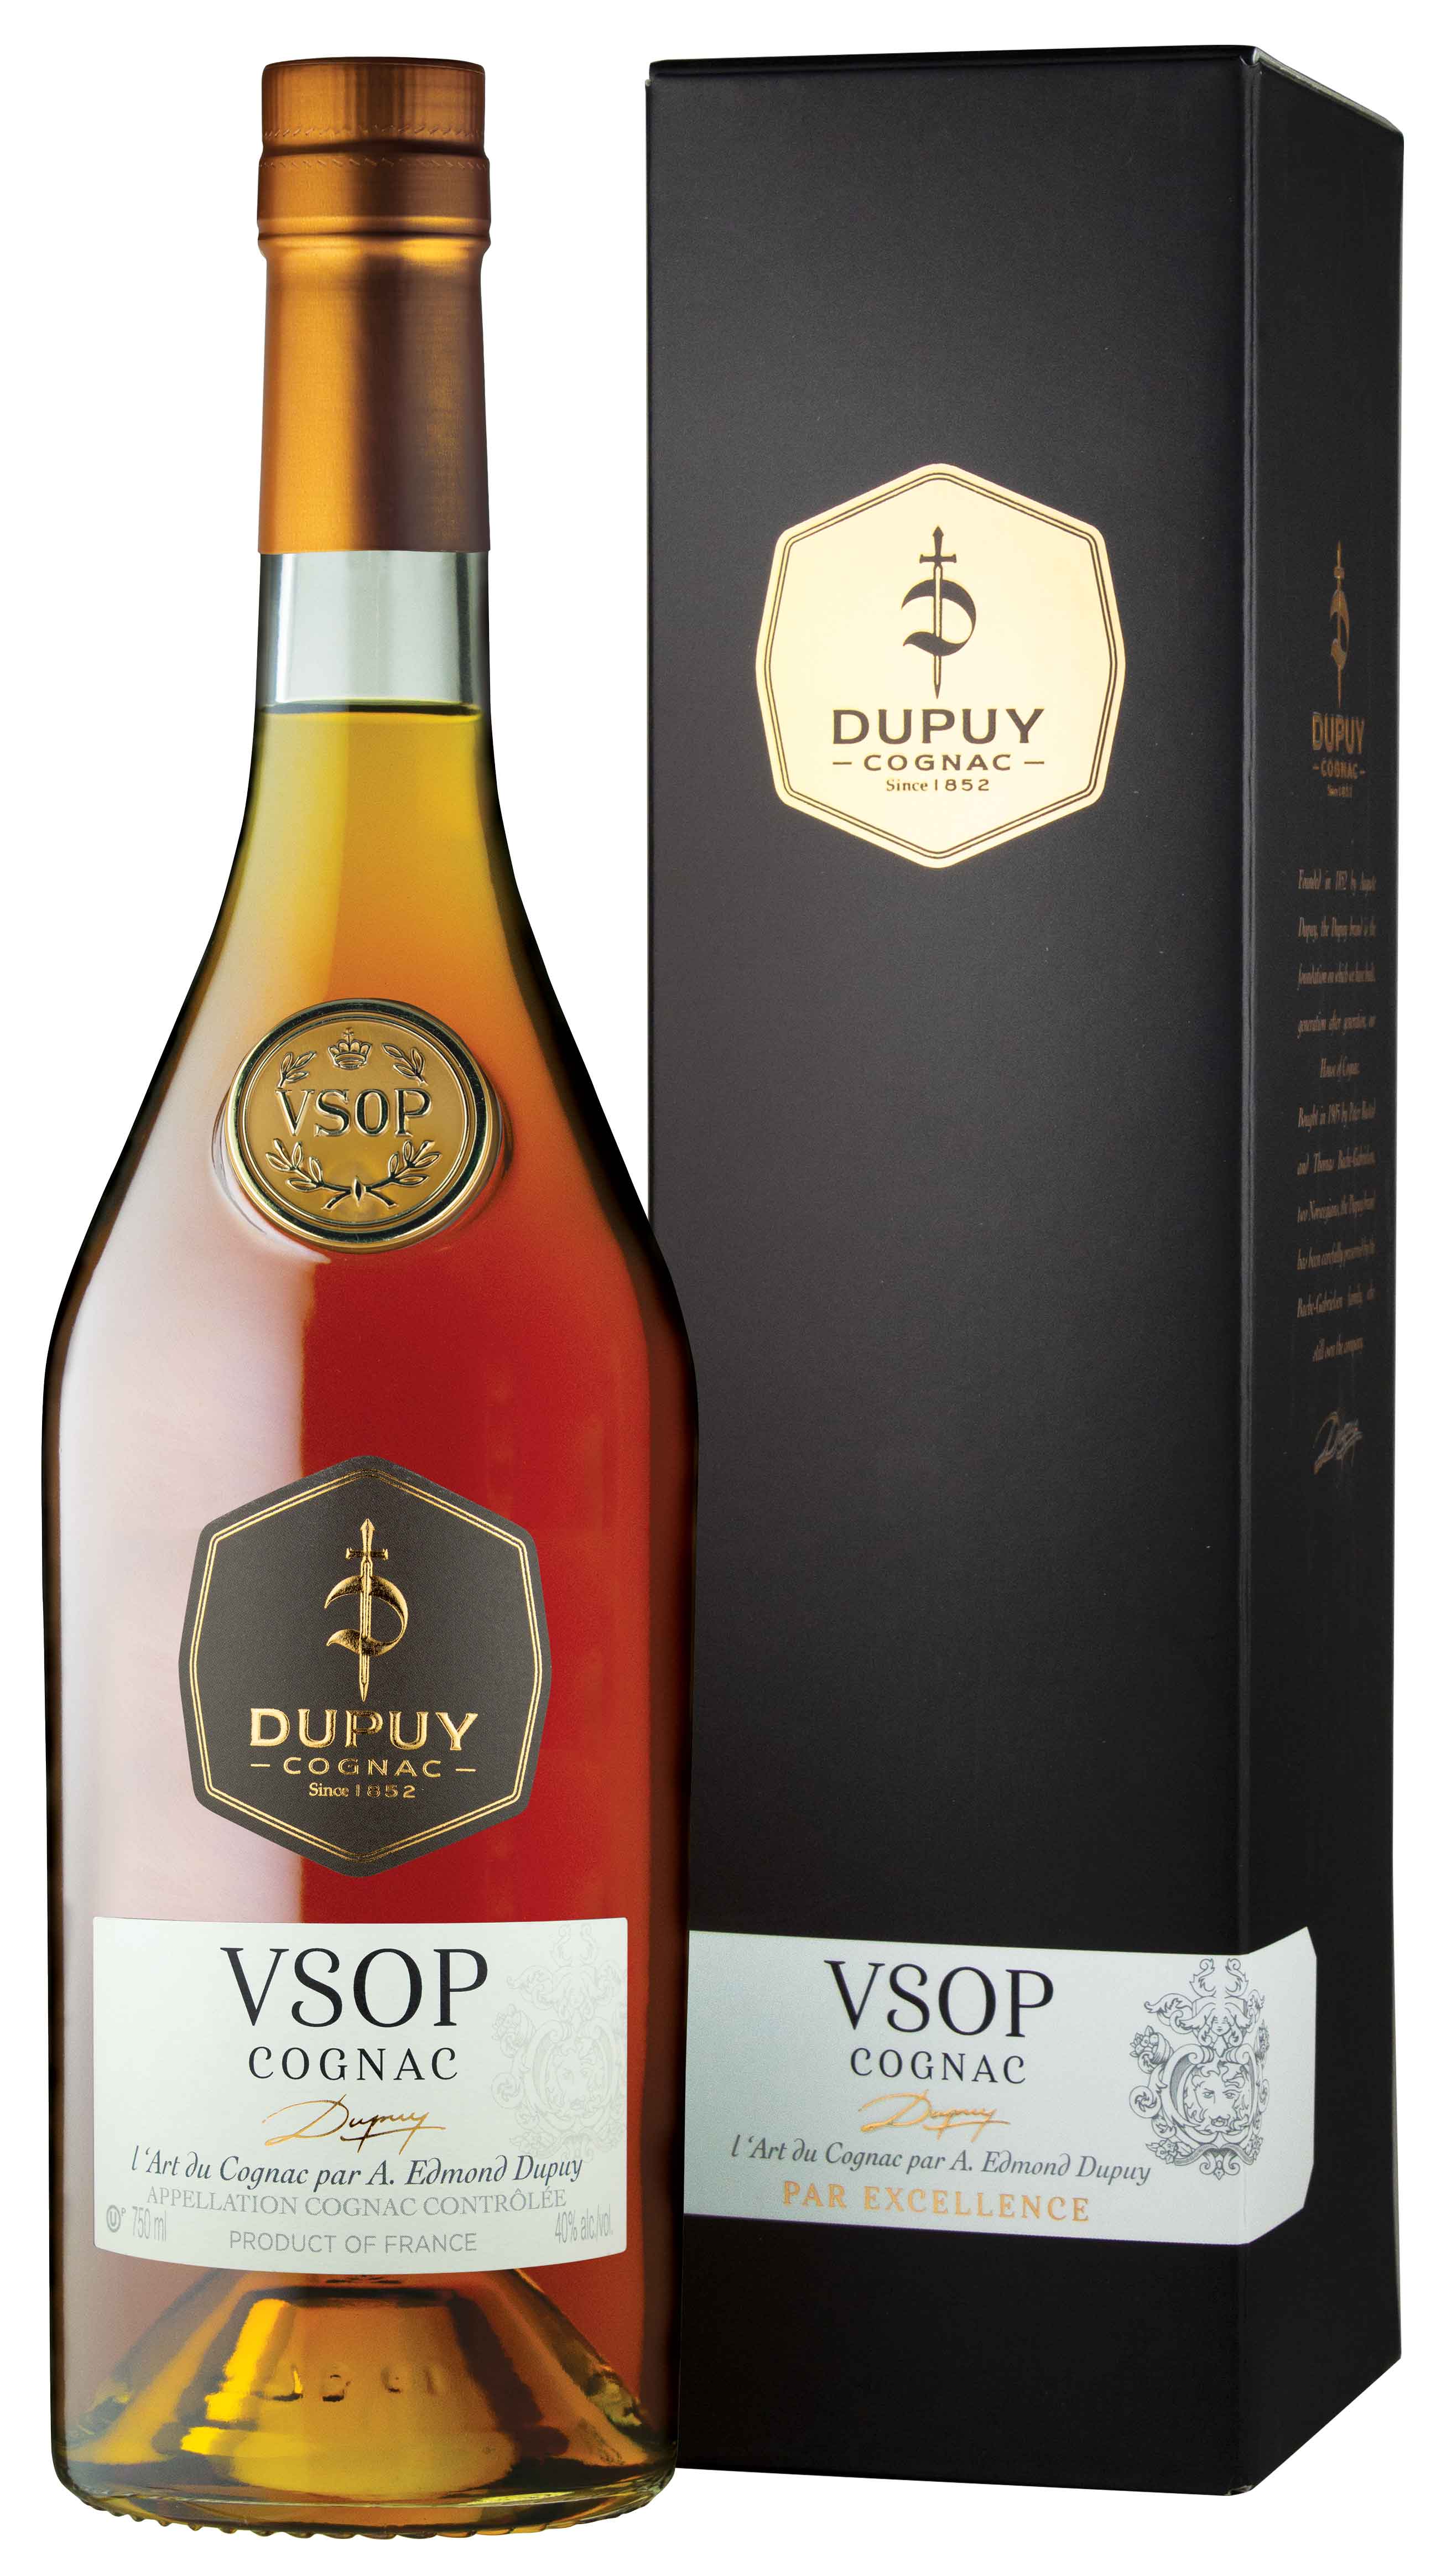 Edmond Dupuy Cognac - V.S.O.P (7 years old) label